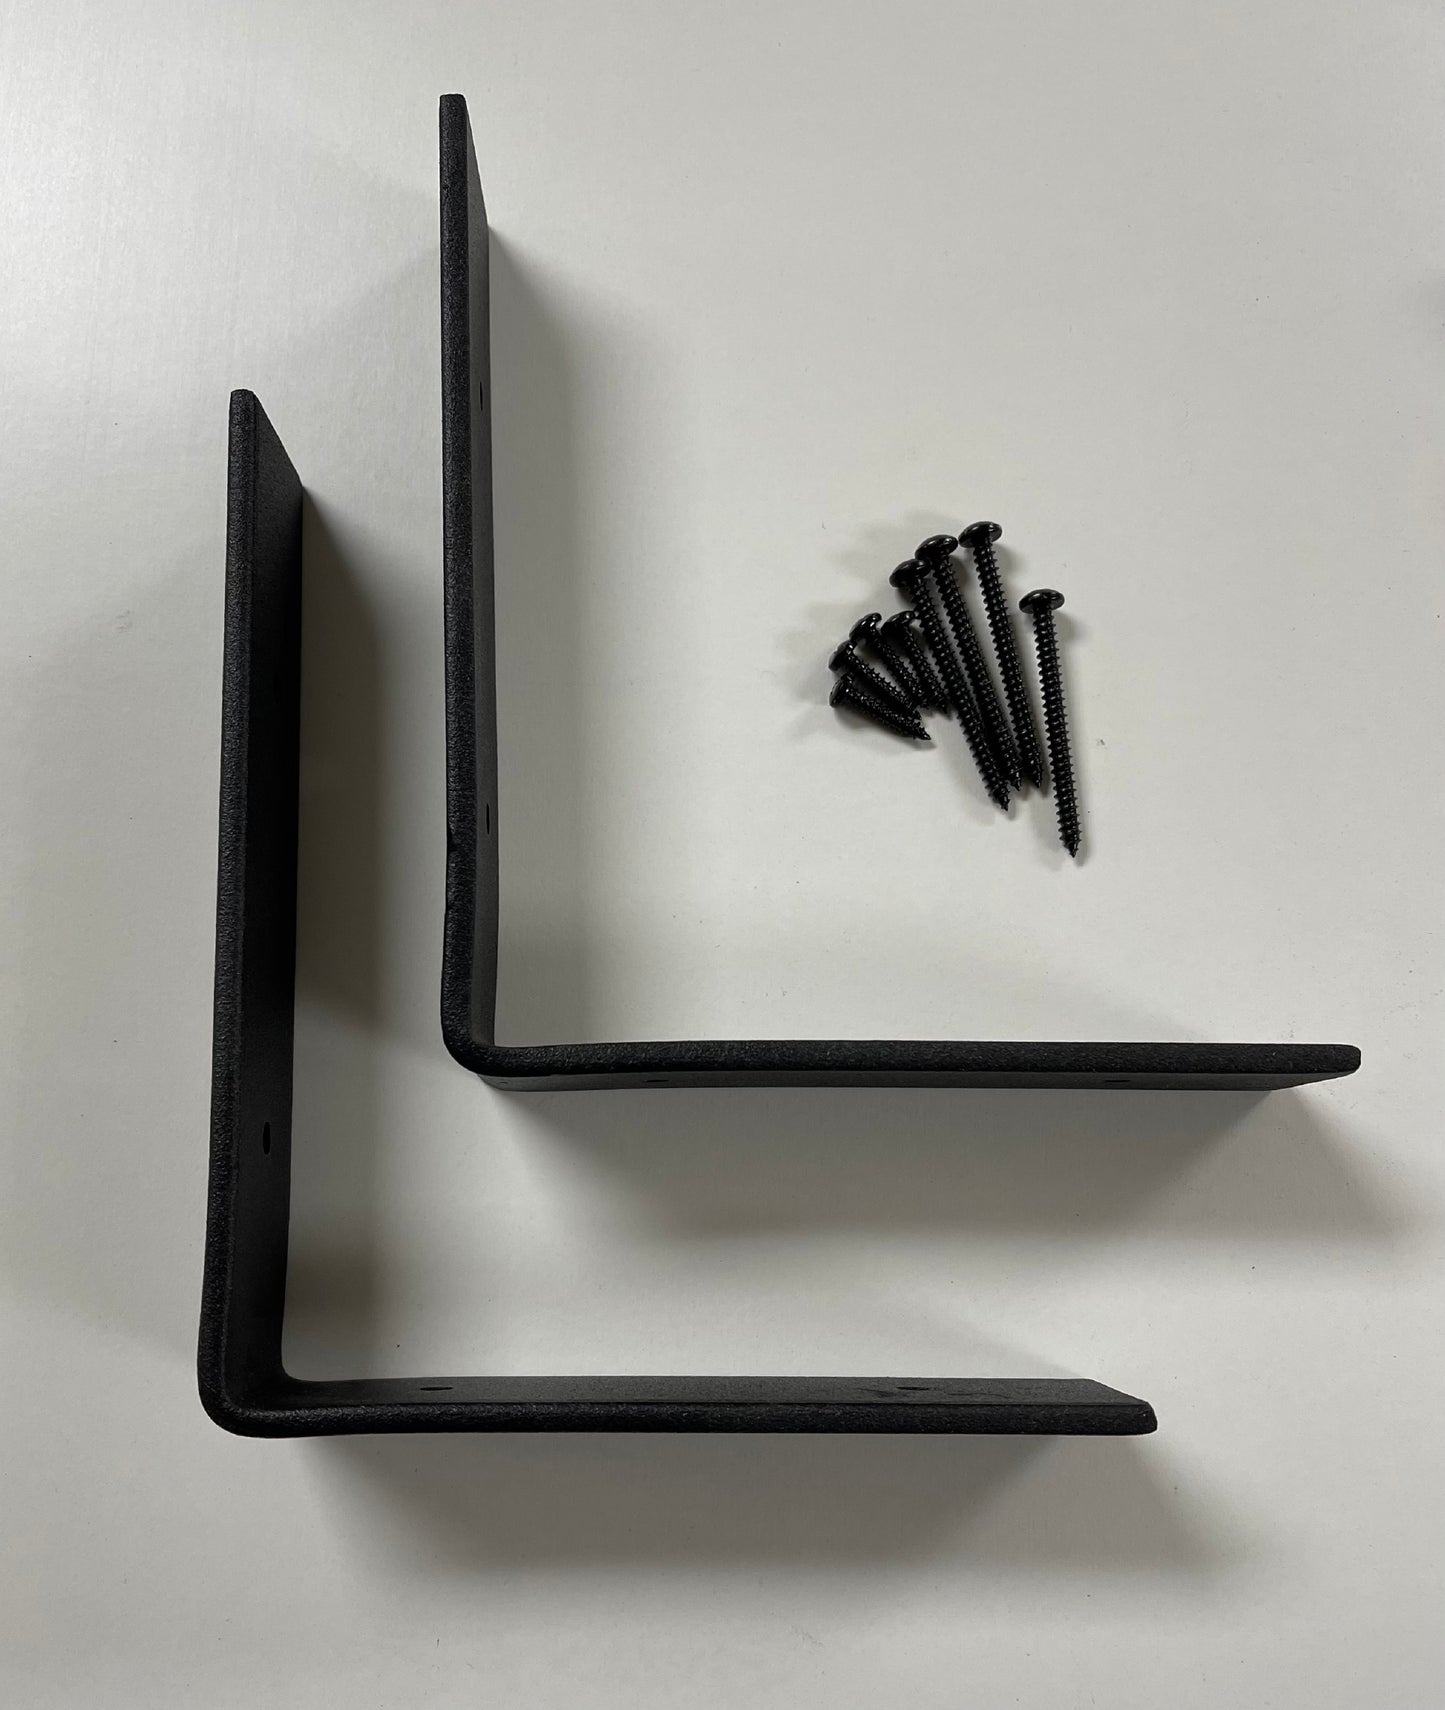 Premium American Black Walnut Industrial Style Shelf with Flat Style Brackets, 20-25mm (1 Inch) Depth